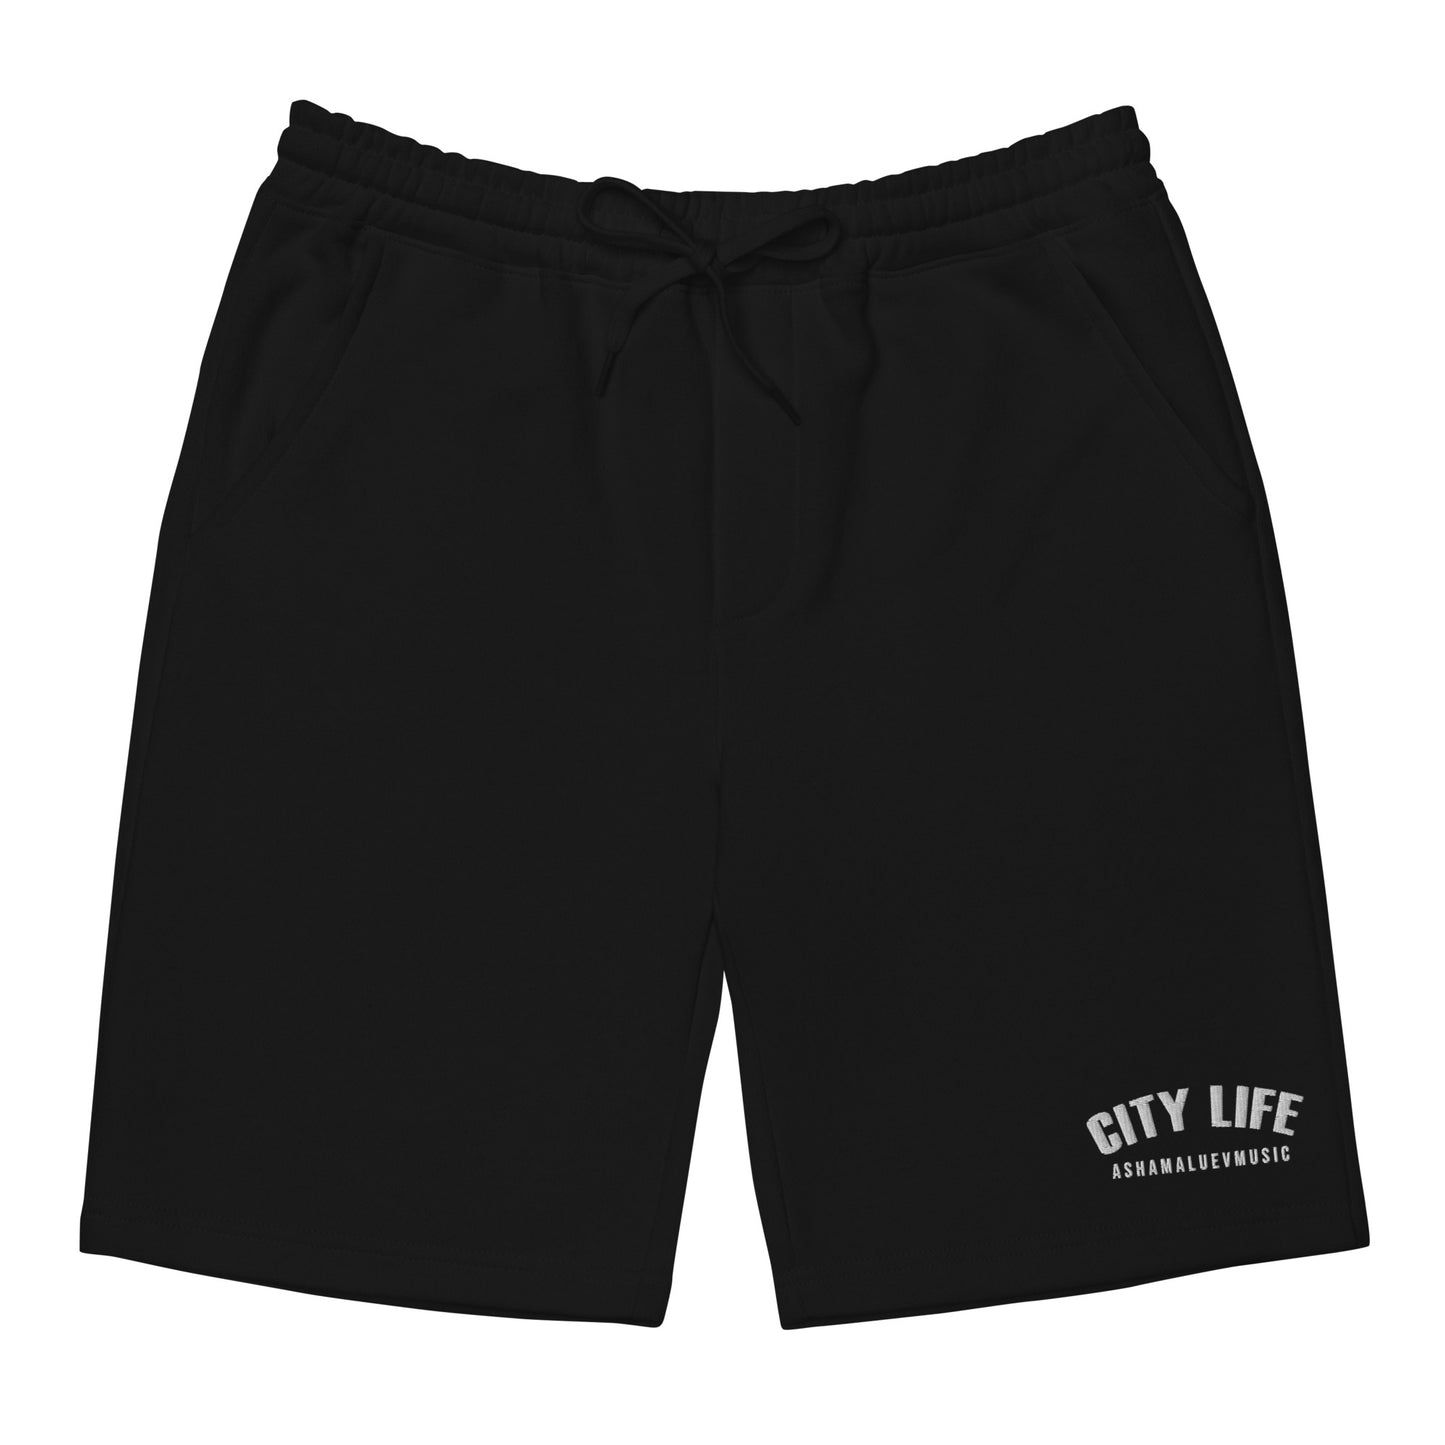 Men's Fleece Shorts "City Life" (Embroidery)